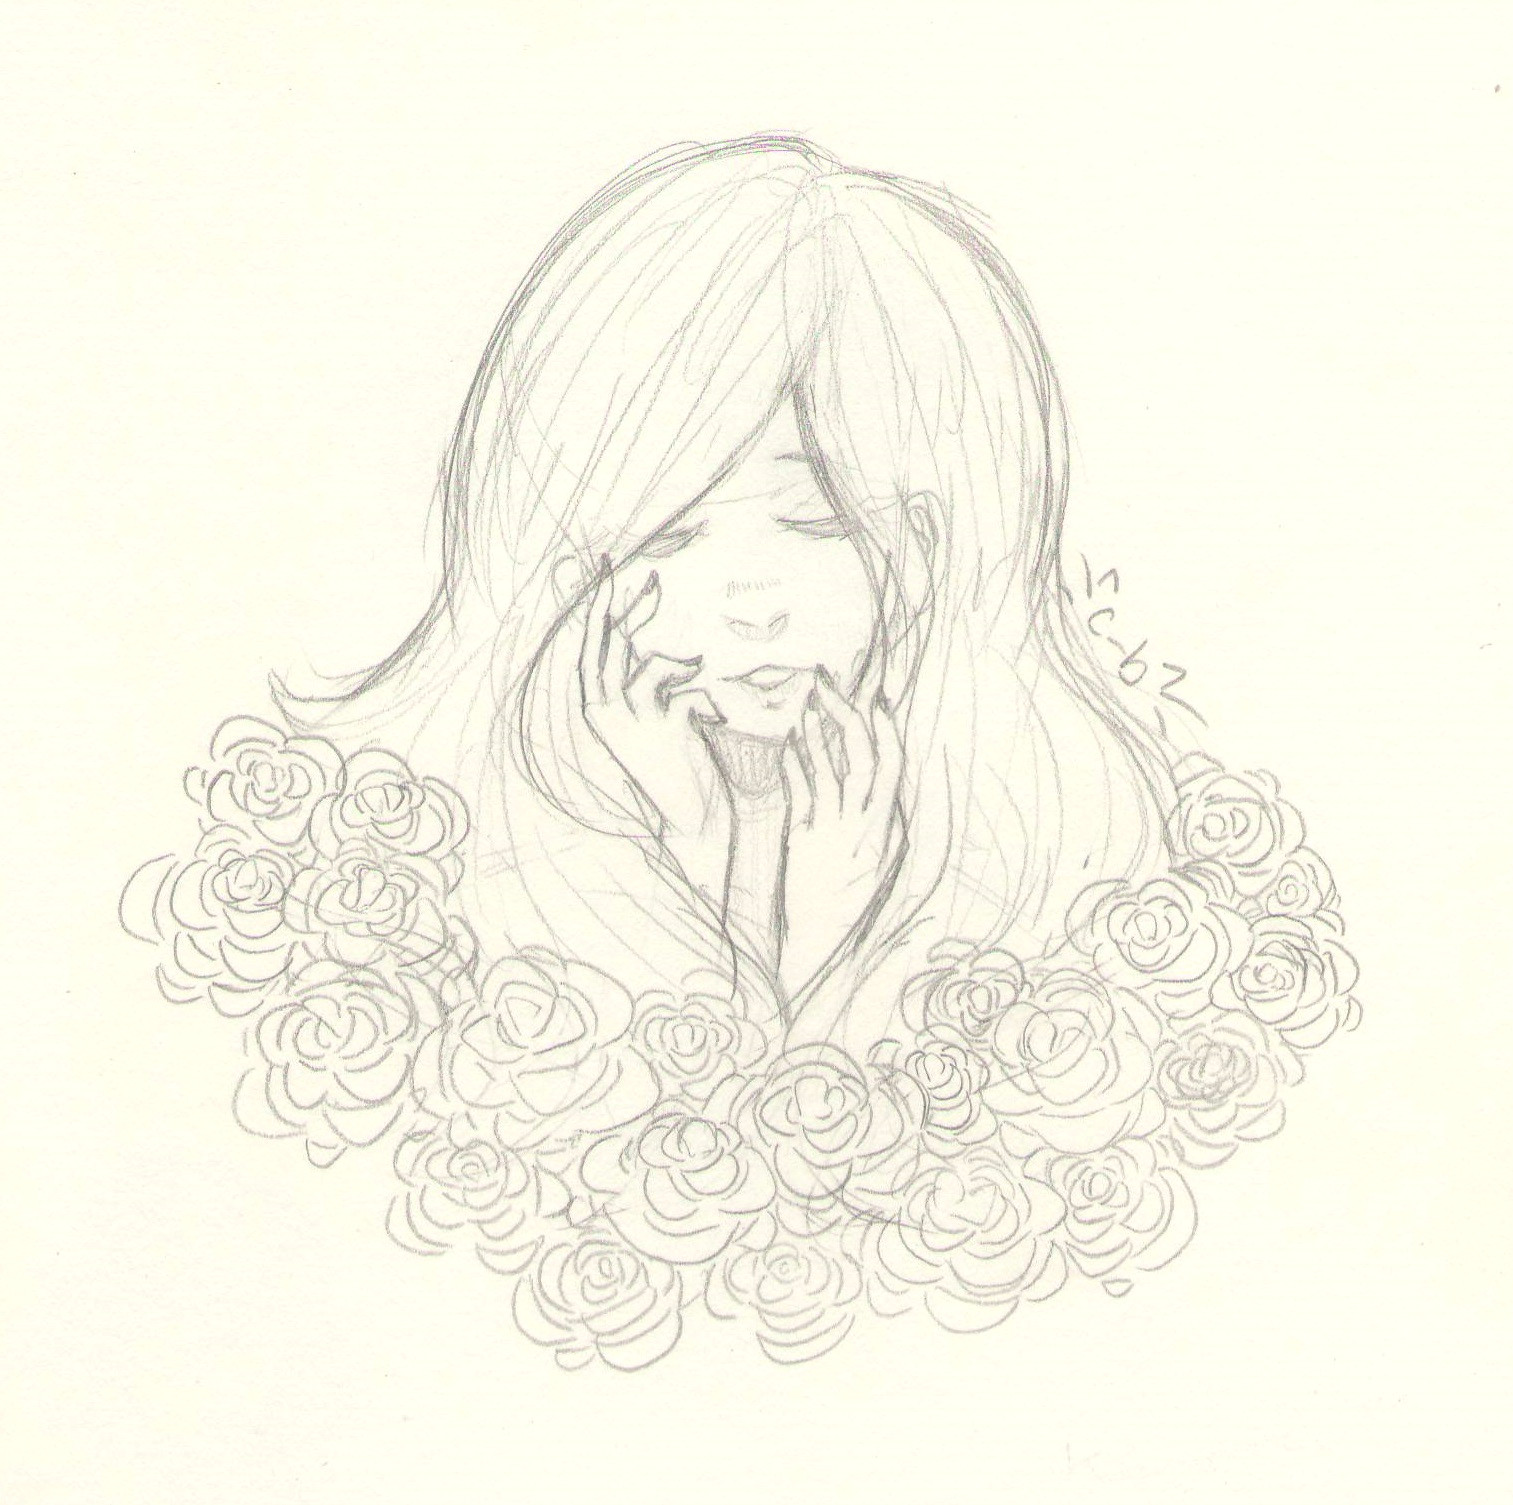 Drawing Anime Roses Roses Album On Imgur